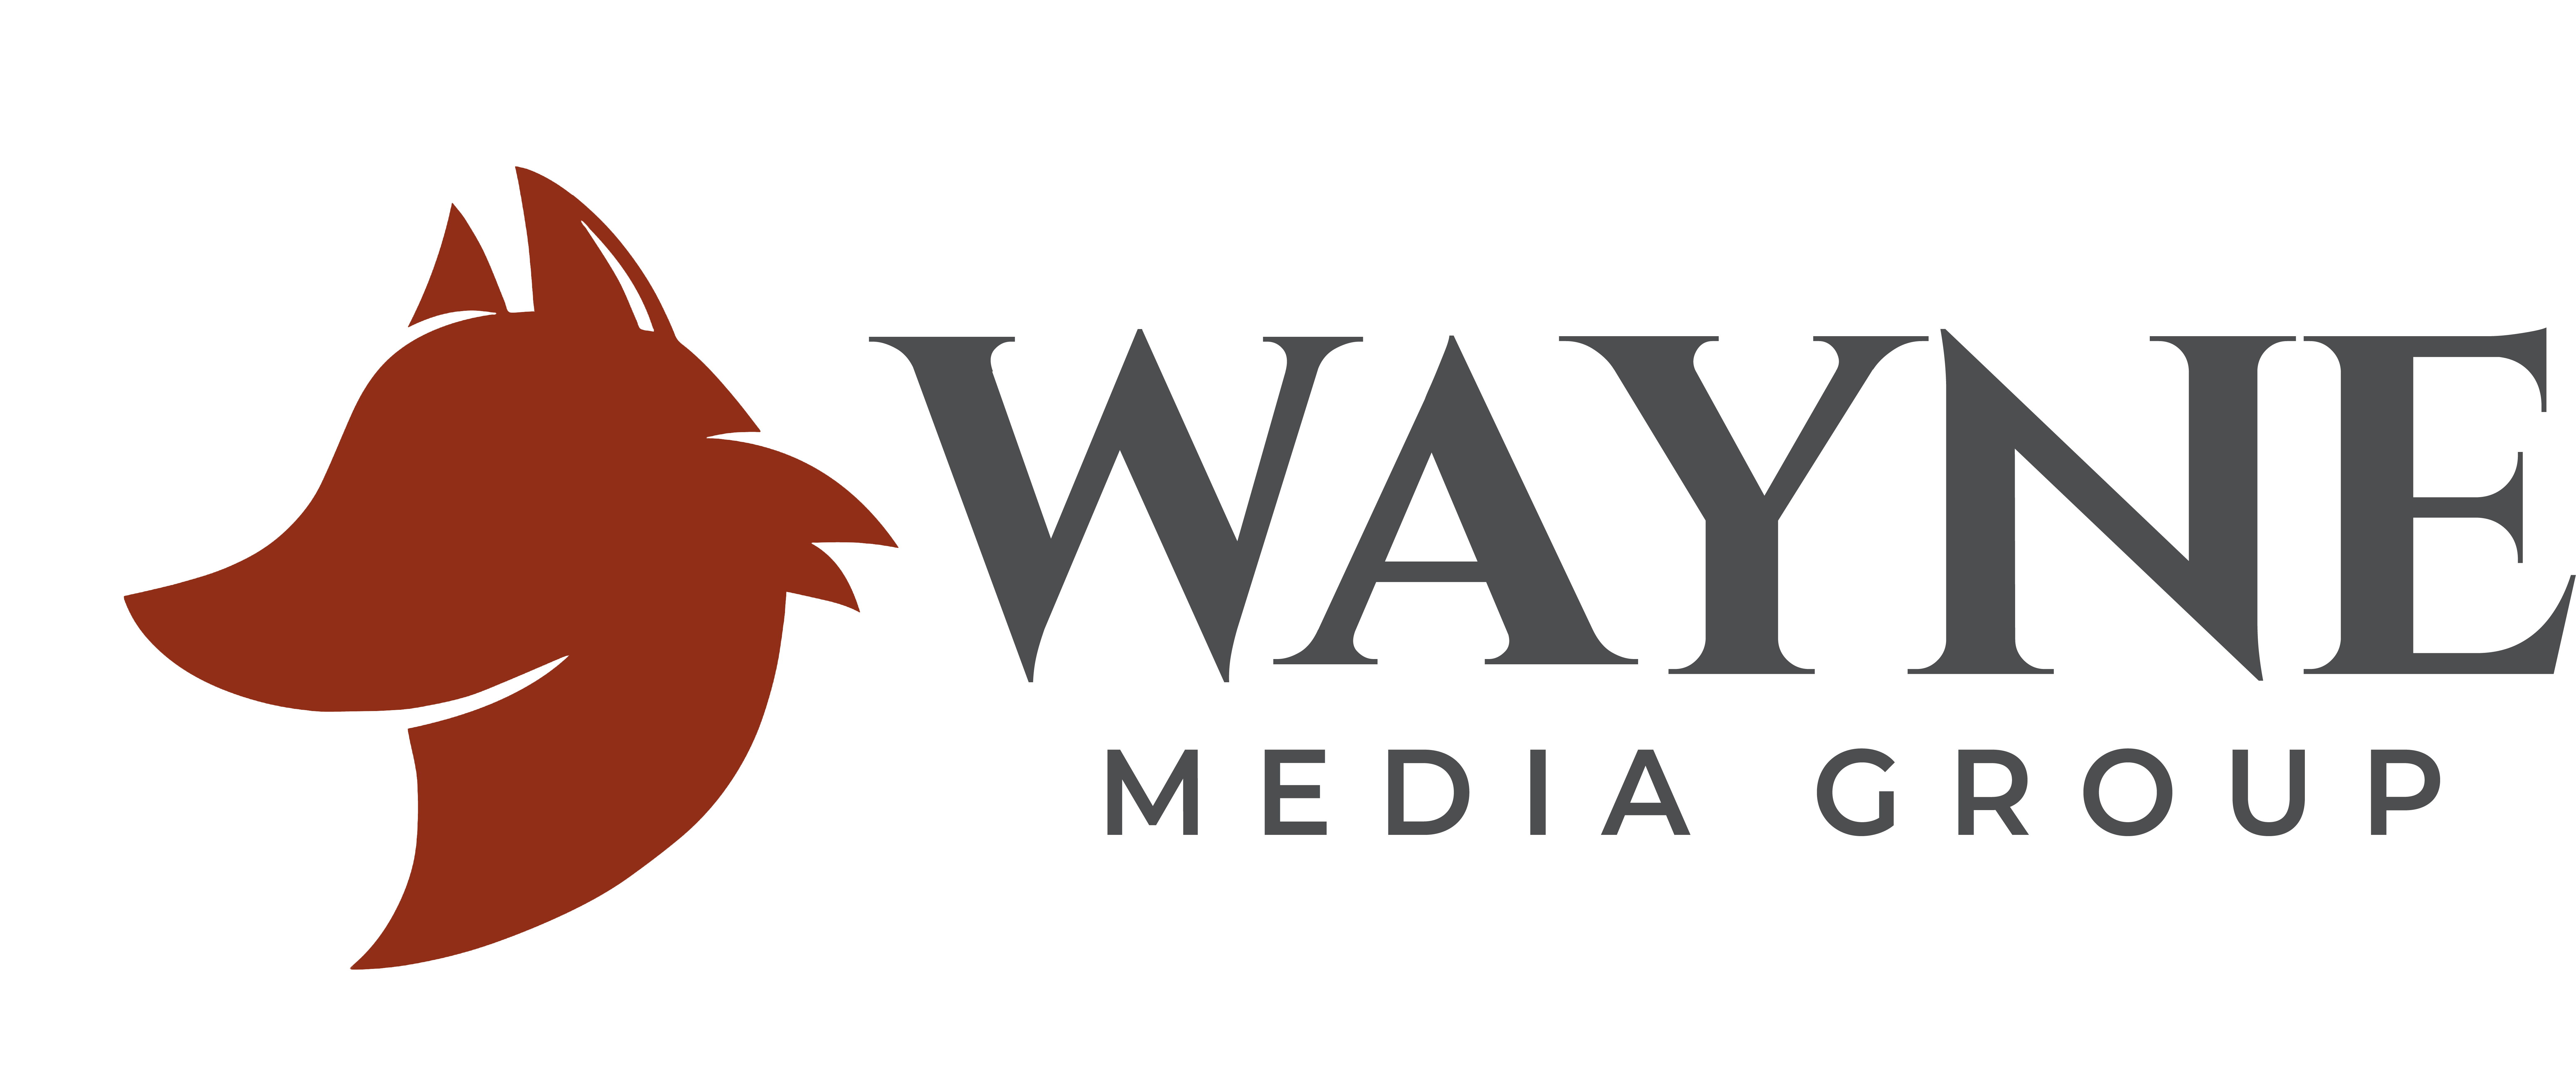 Wayne Media Group